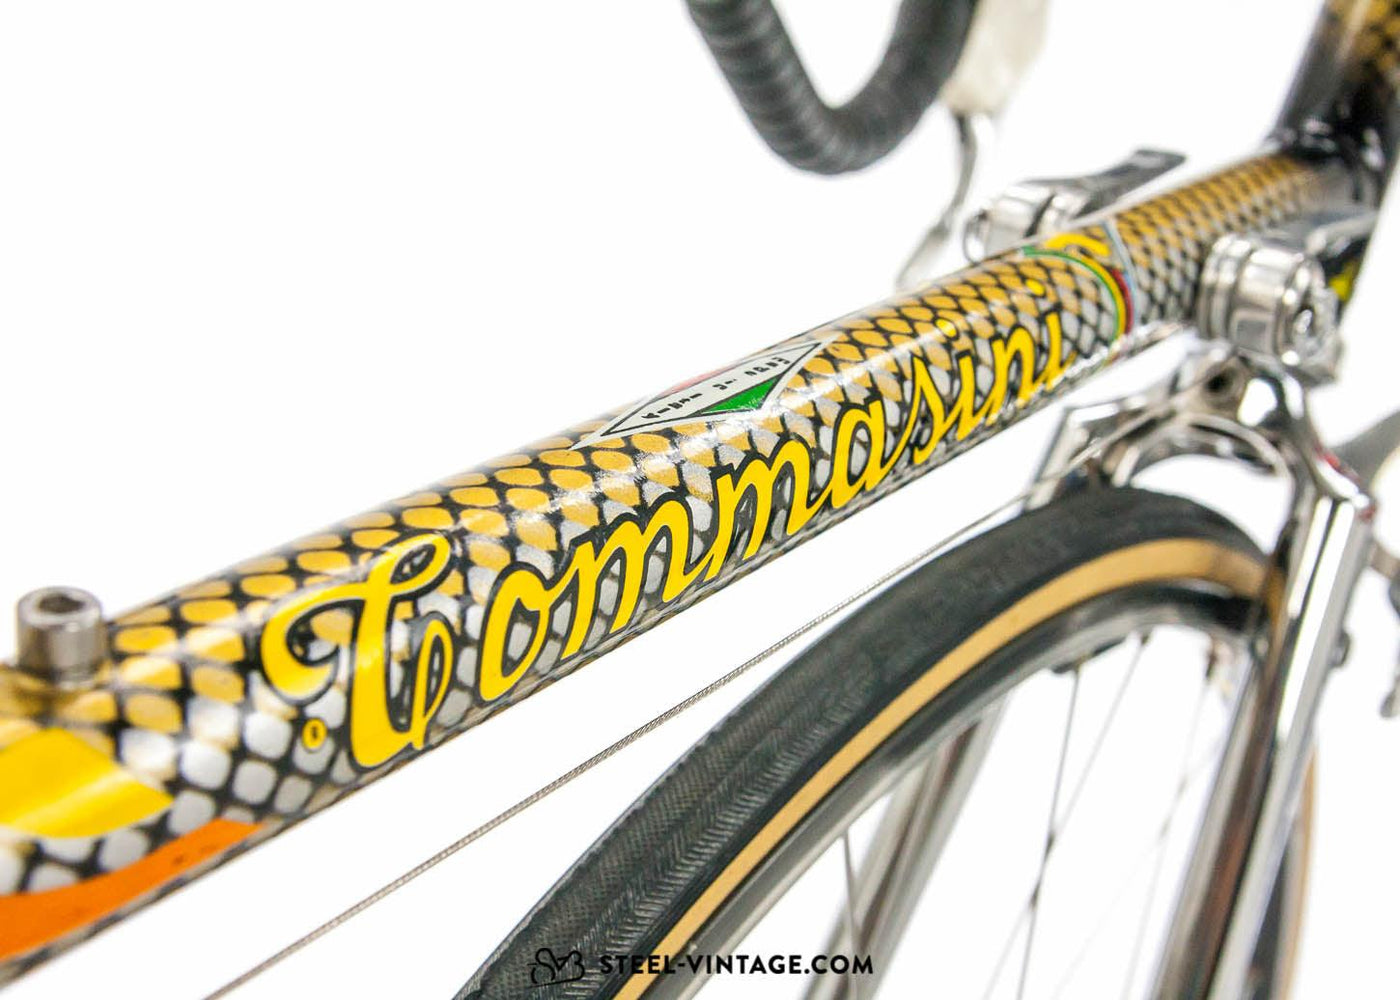 Tommasini Super Prestige 1990s Classic Road Bike - Steel Vintage Bikes